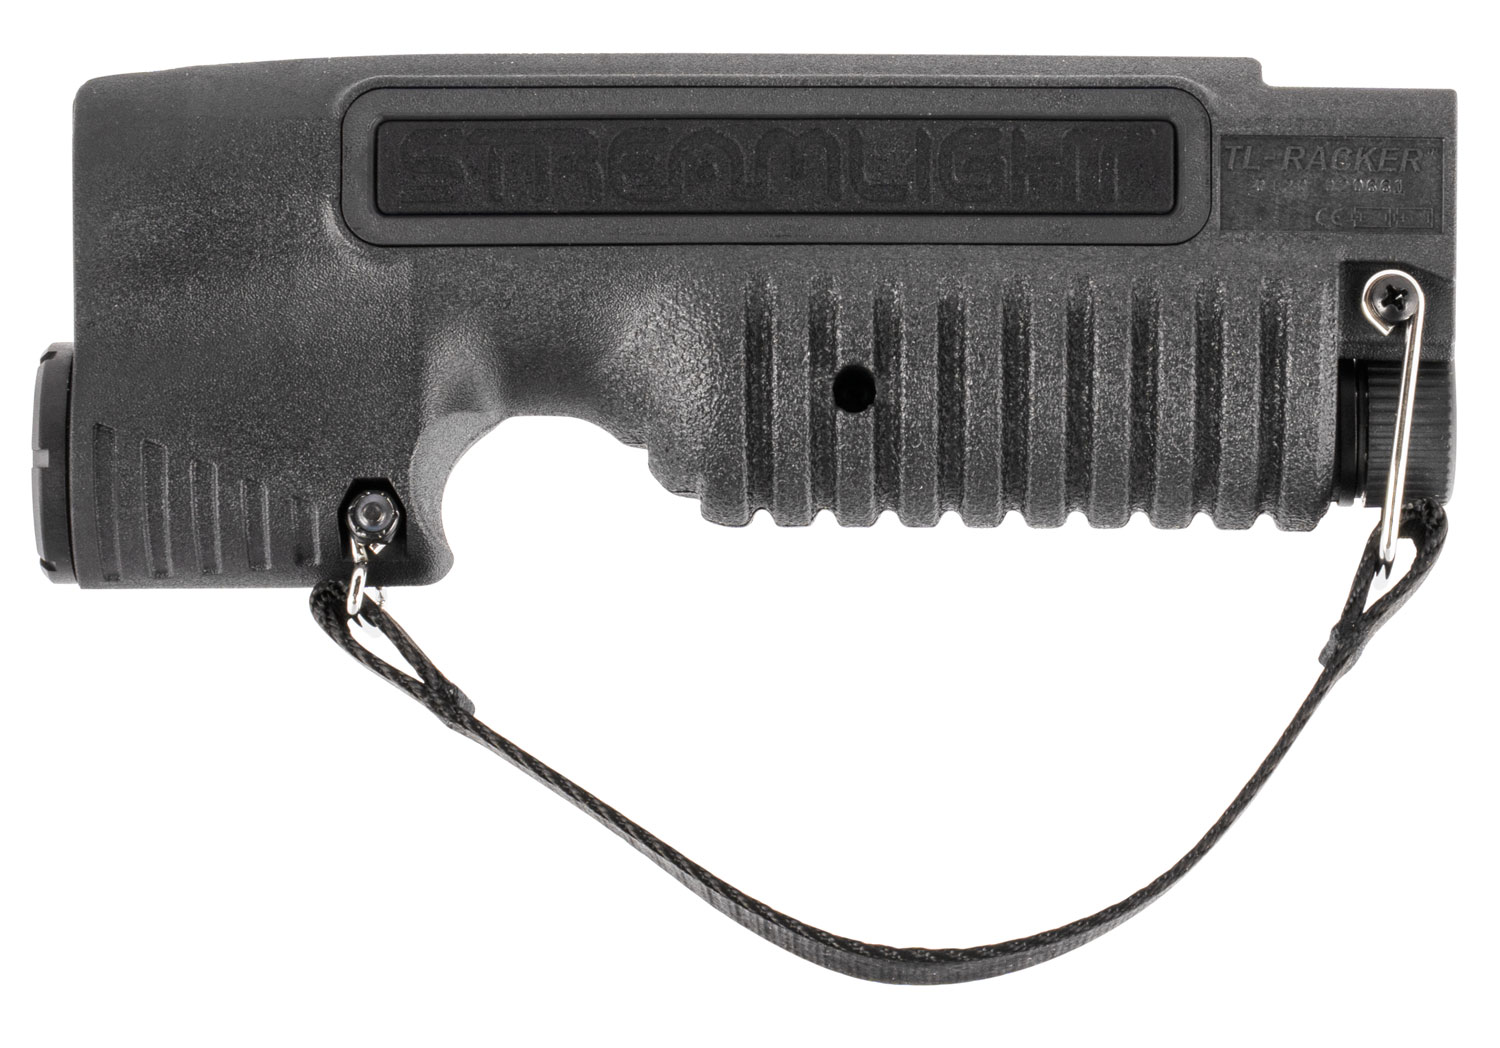 Streamlight TL-Racker Shotgun Forend Light  <br>  Black 1000 Lumens Fits Mossberg Shockwave